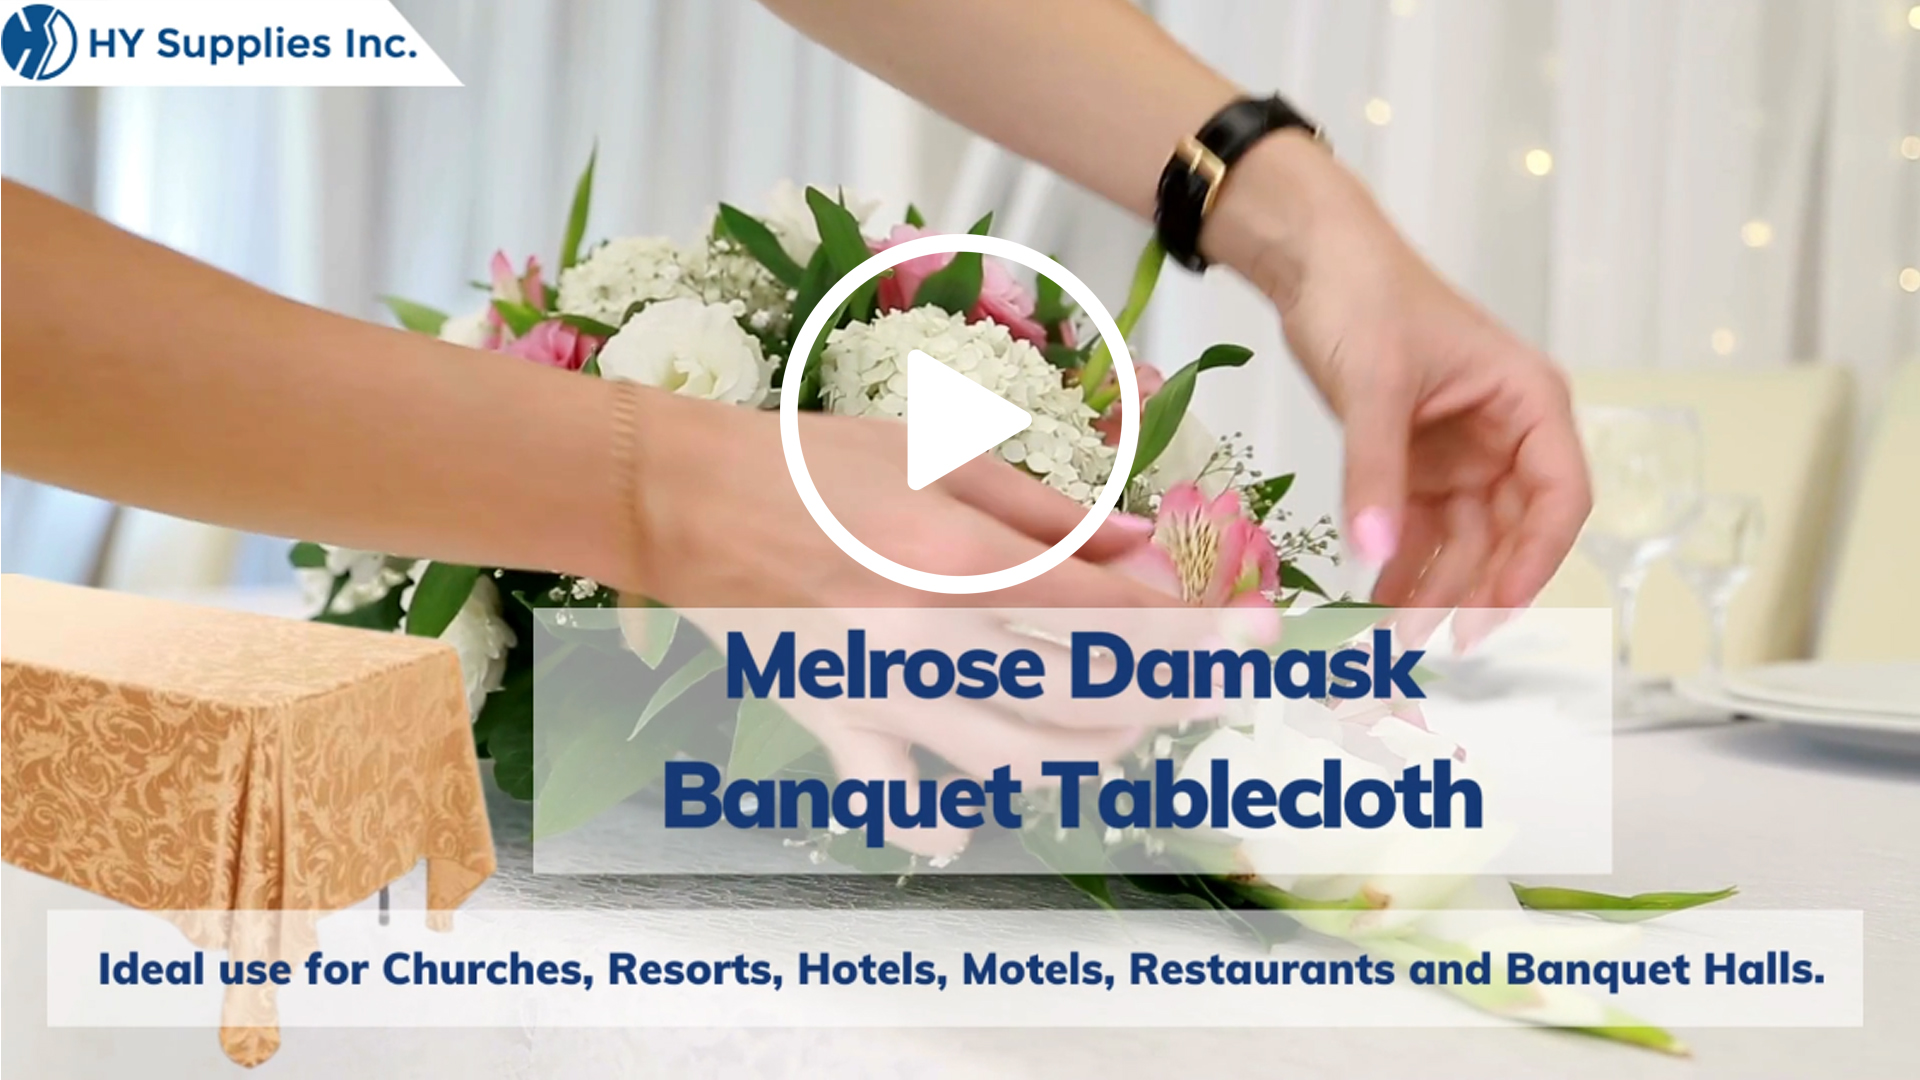 Melrose Damask Banquet Tablecloth